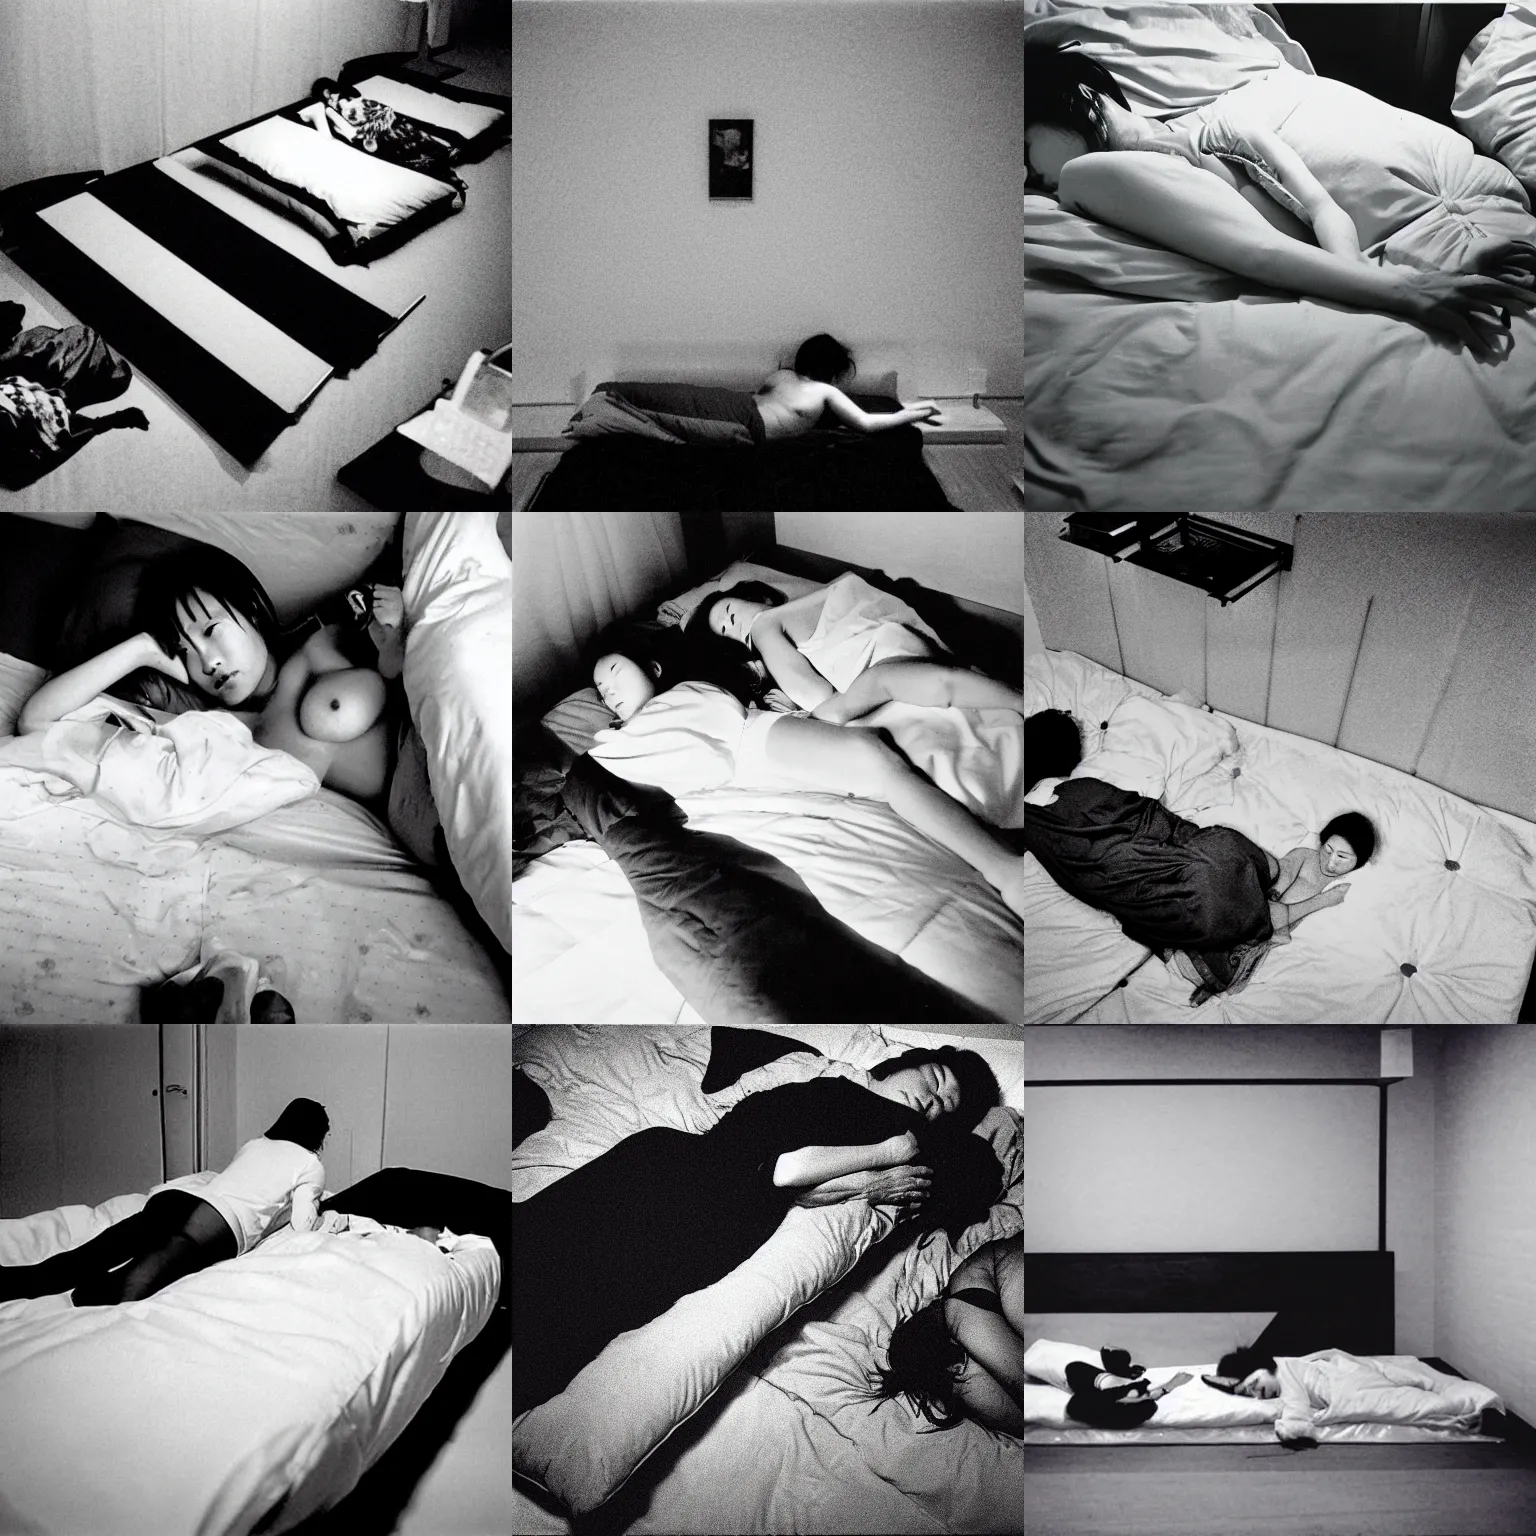 Prompt: a drone flying next to a woman sleeping on an empty bed in a dark room, daido moriyama, nobuyoshi araki